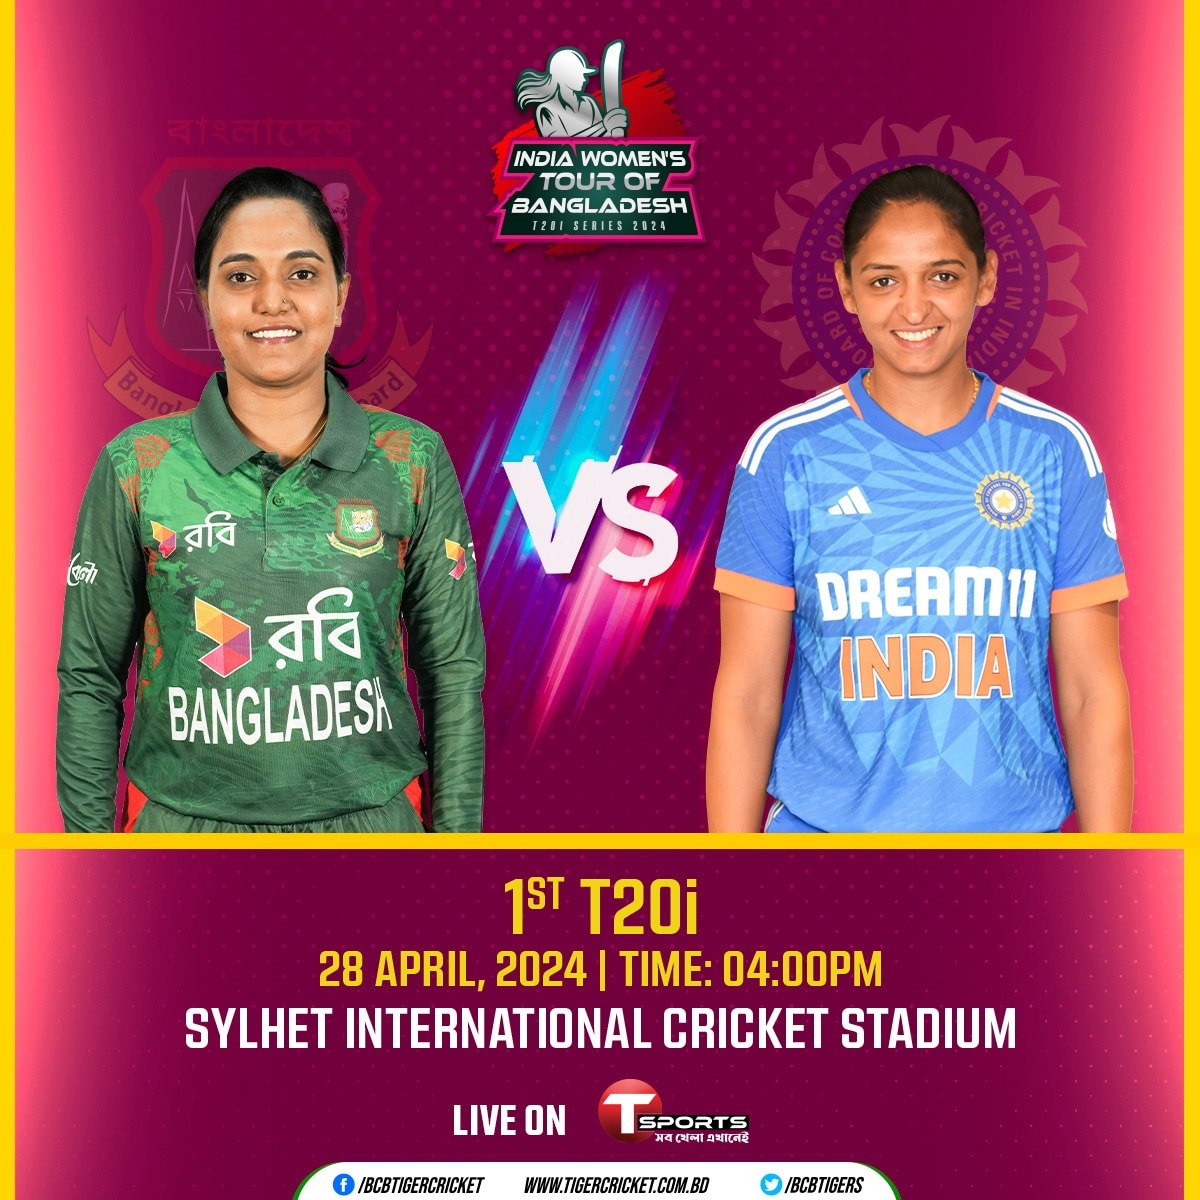 India Women’s Team Tour of Bangladesh 2024

Bangladesh vs India | 1st T20i | 28 April 2024 | Time: 04:00 pm

Details 👉: tigercricket.com.bd/live-score/ind…

#BCB #Cricket #BANWvINDW #LiveCrcket #HomeSeries #T20Iseries #womenscricket